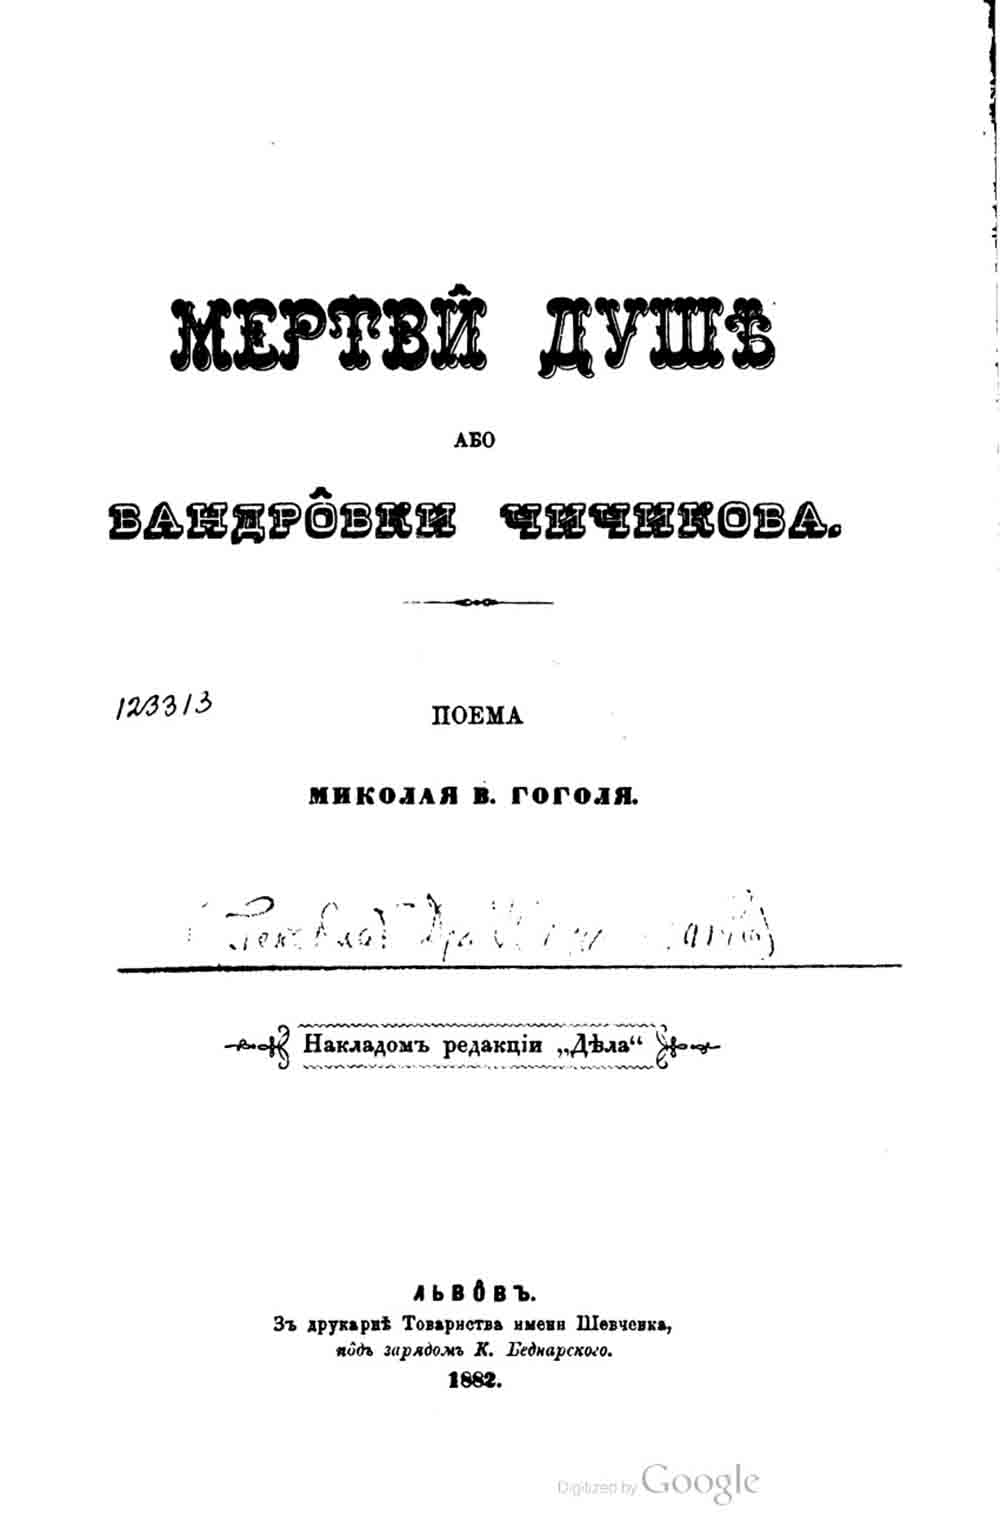 Dead Souls Book Cover 1882 Ukrainian Translation Nikolai Gogol